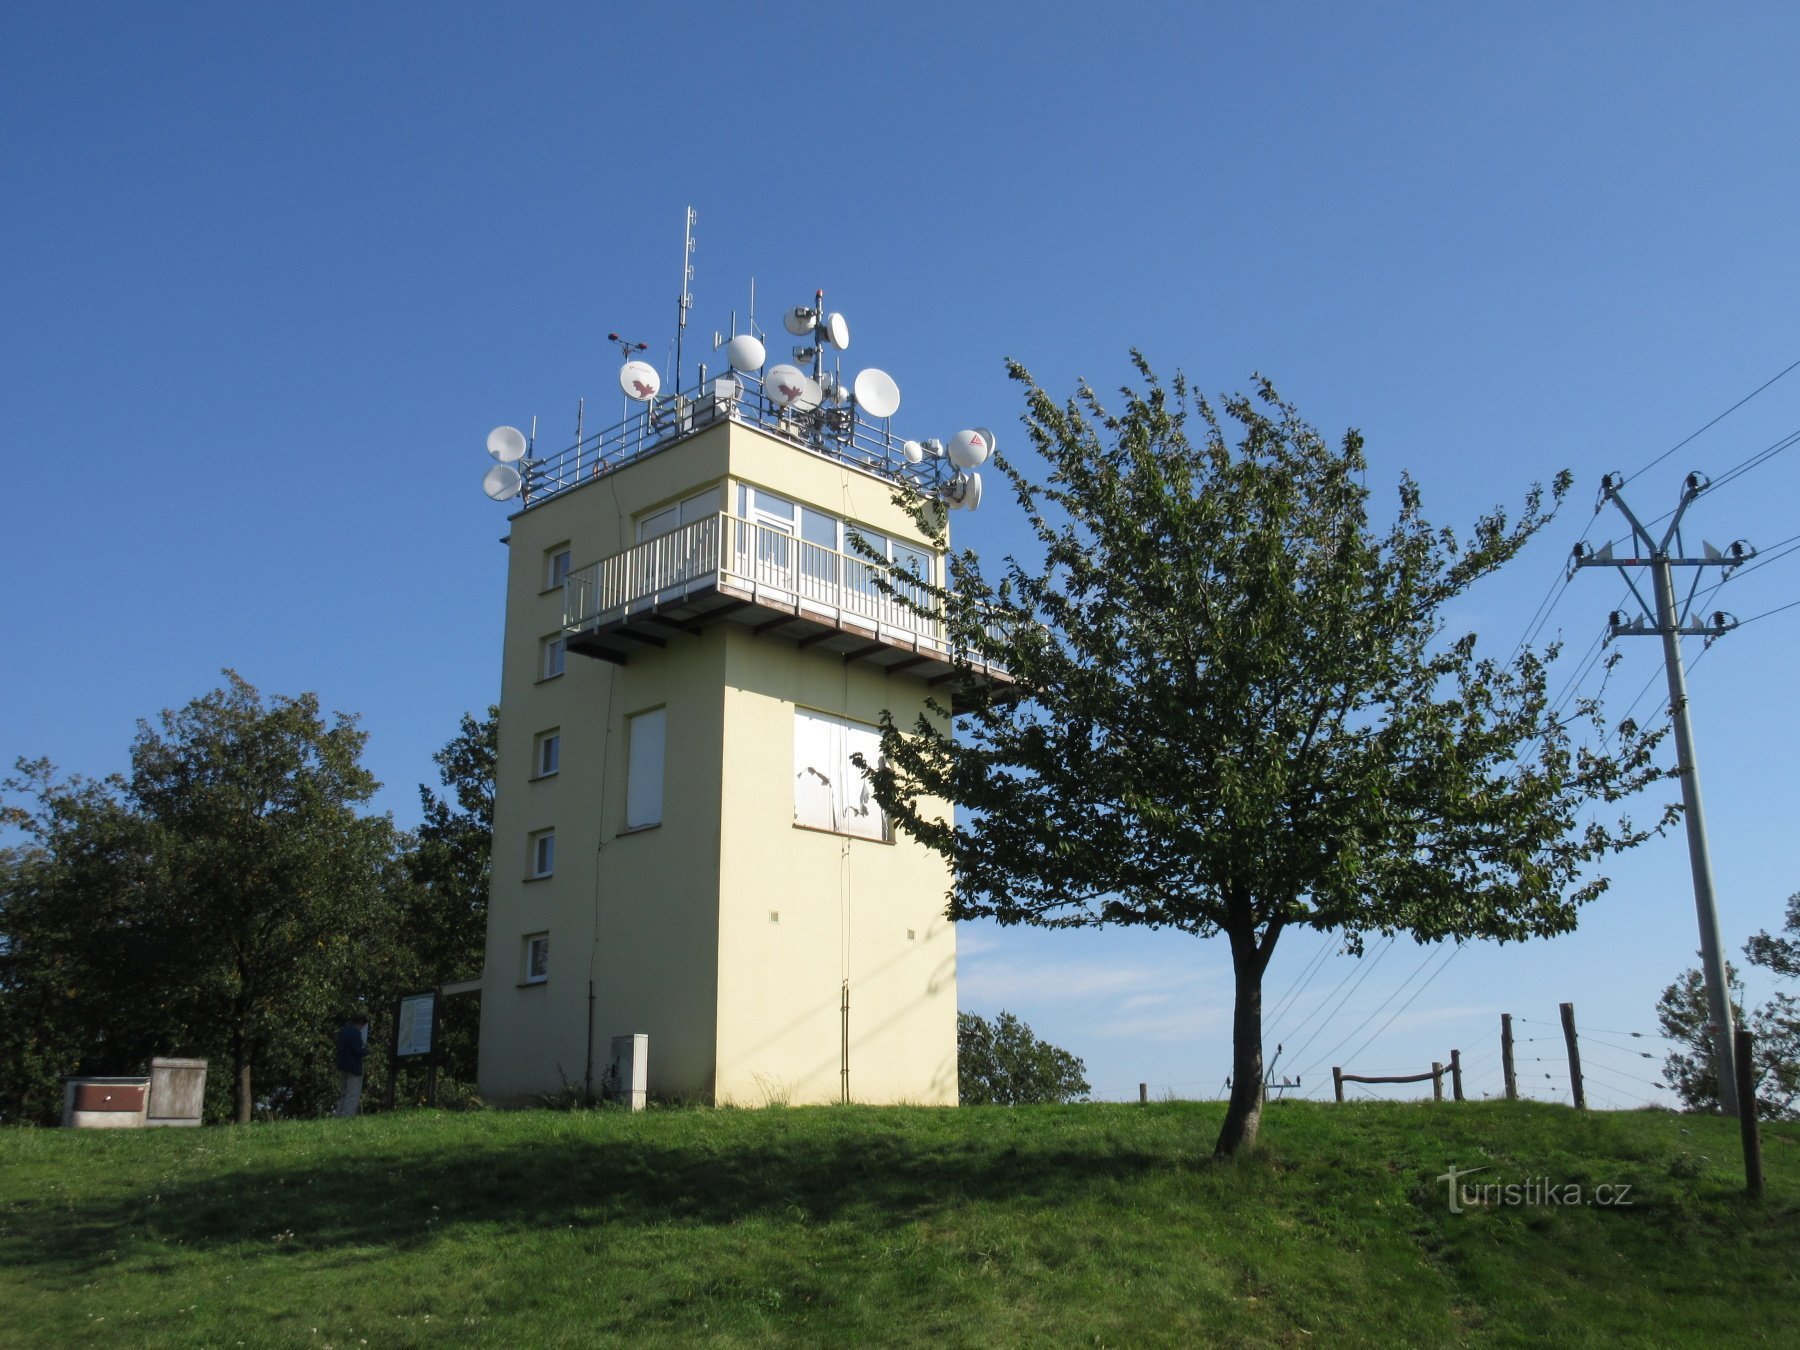 Malhostovice – landsby og Zlobice observationstårn